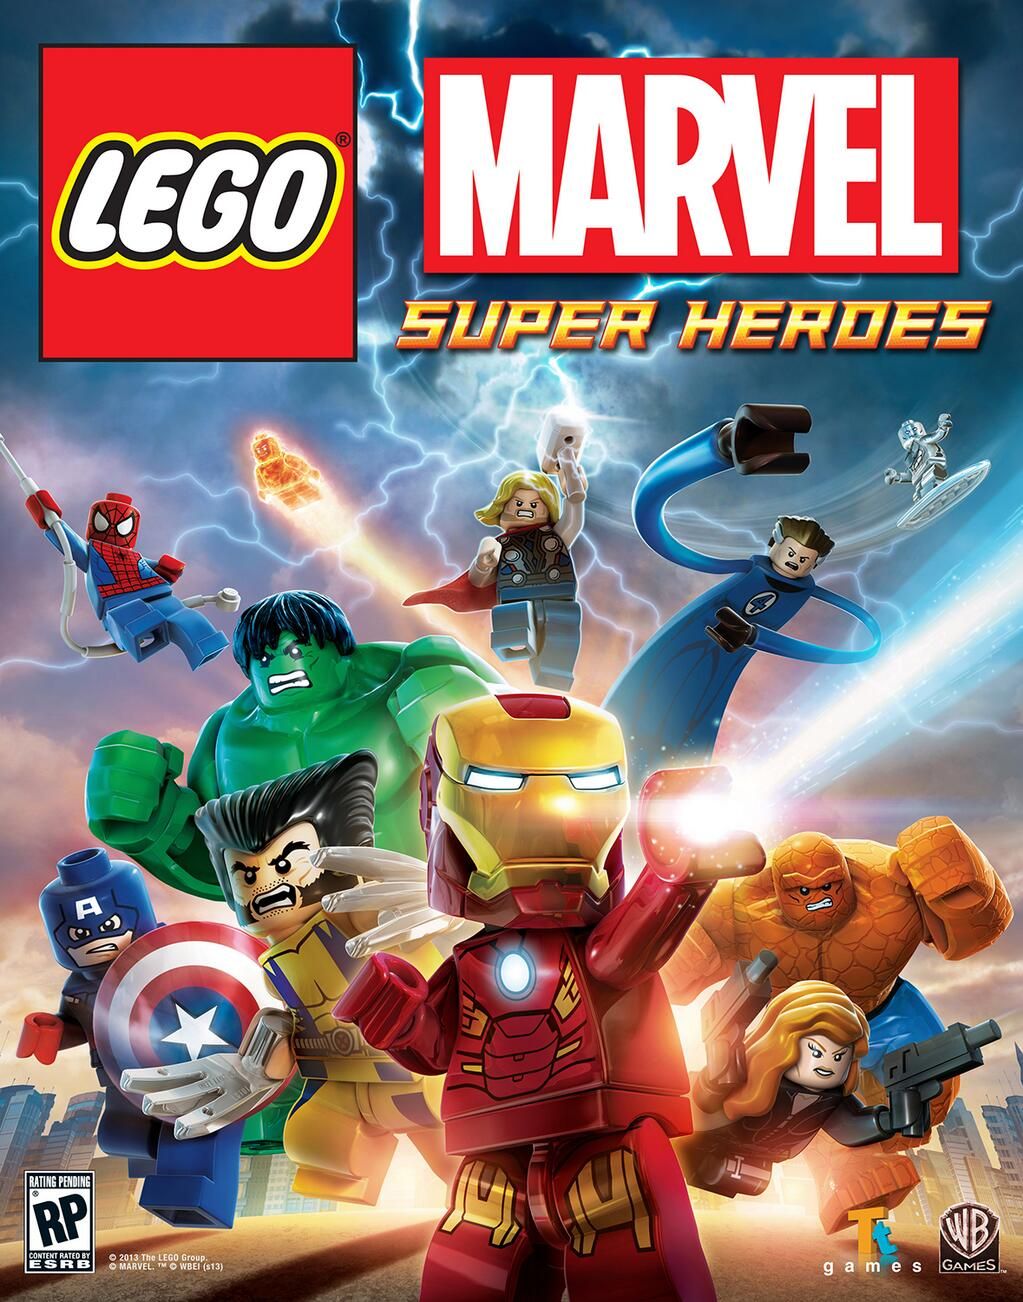 LEGO_Marvel_Super_Heroes_box_art.jpg